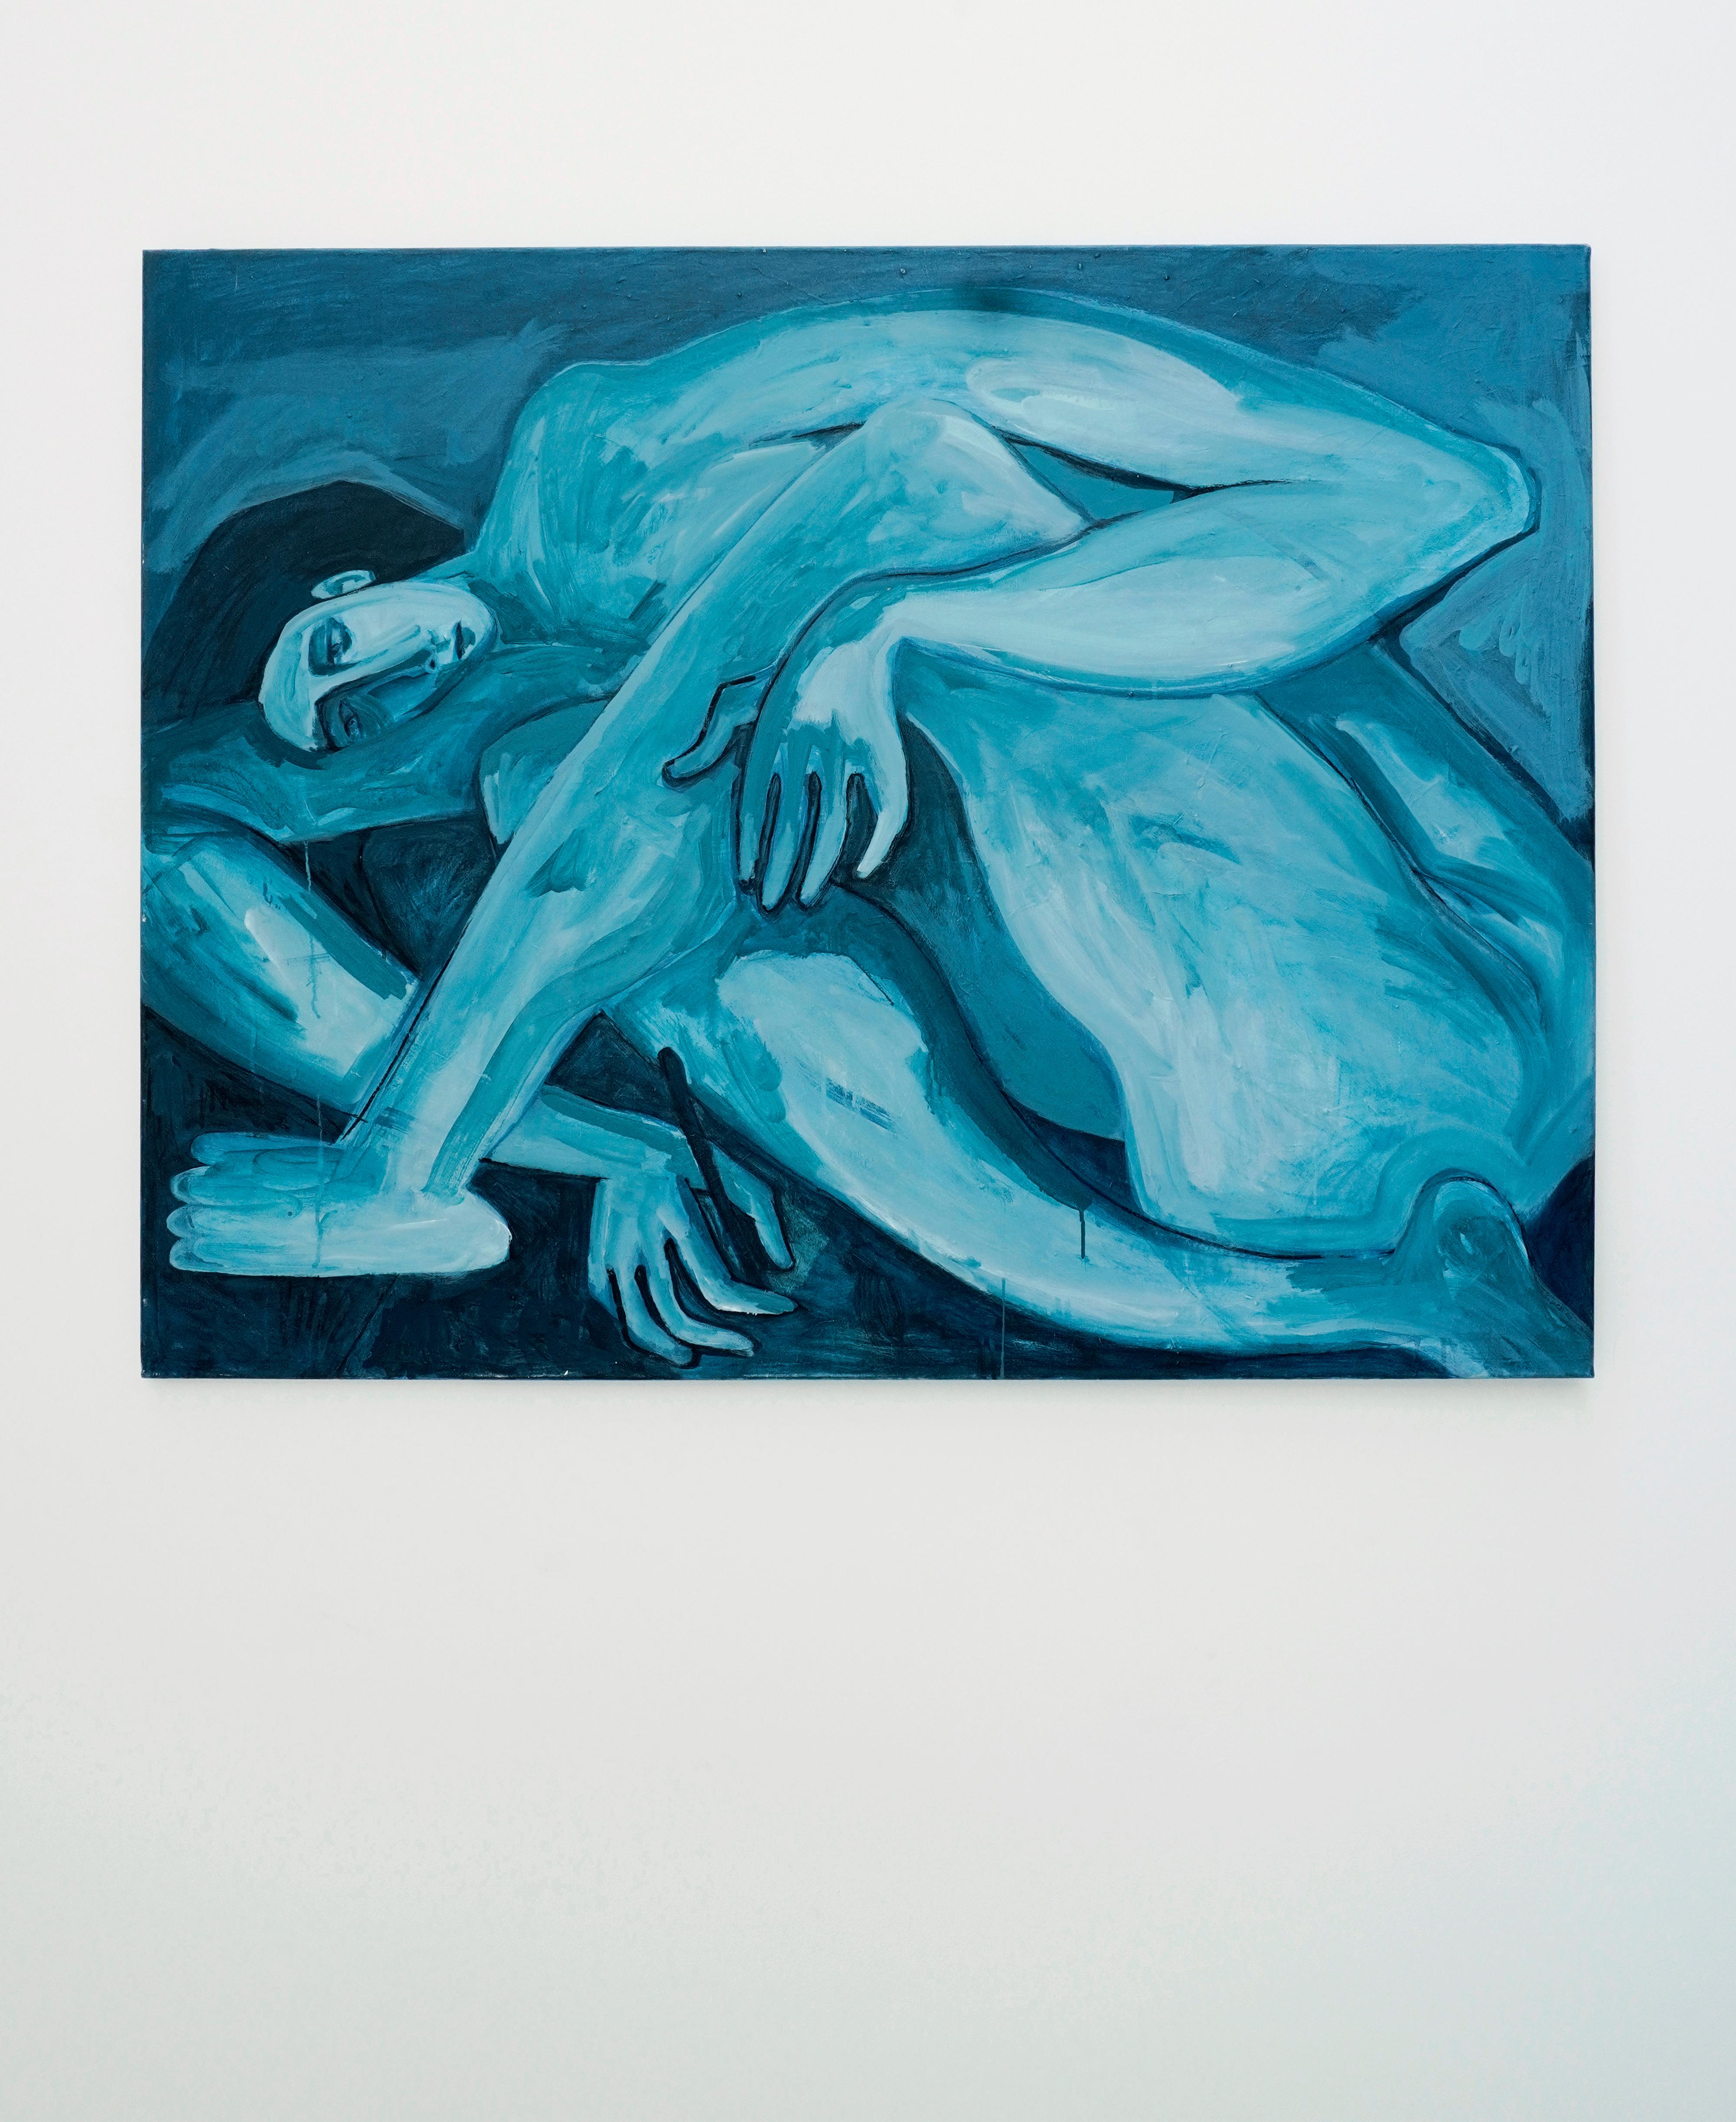 Magdalena Paz Abstract Painting - Cuidado! Las ideas son ladronas de sueños, abstract blue dream-like painting